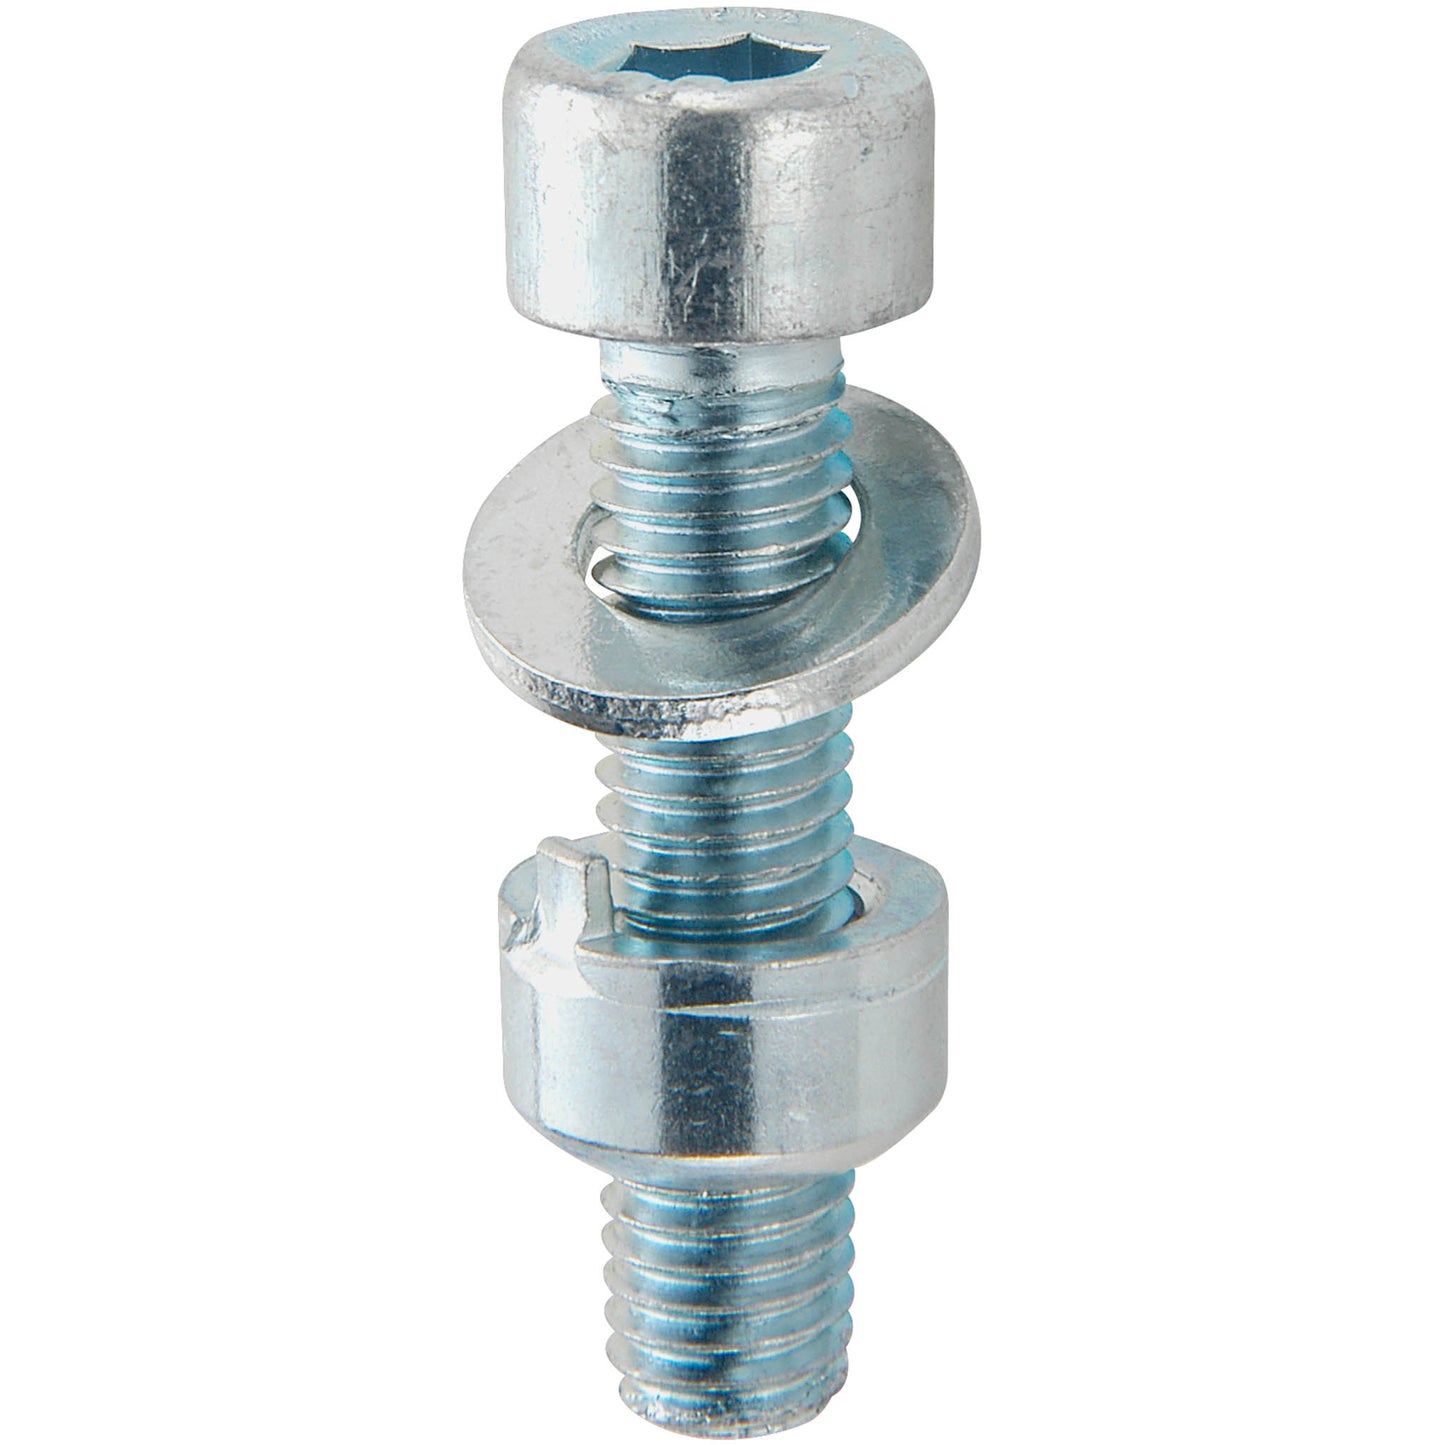 Hexagon socket clamping bolt M 8 x 30 mm set, galvanized steel